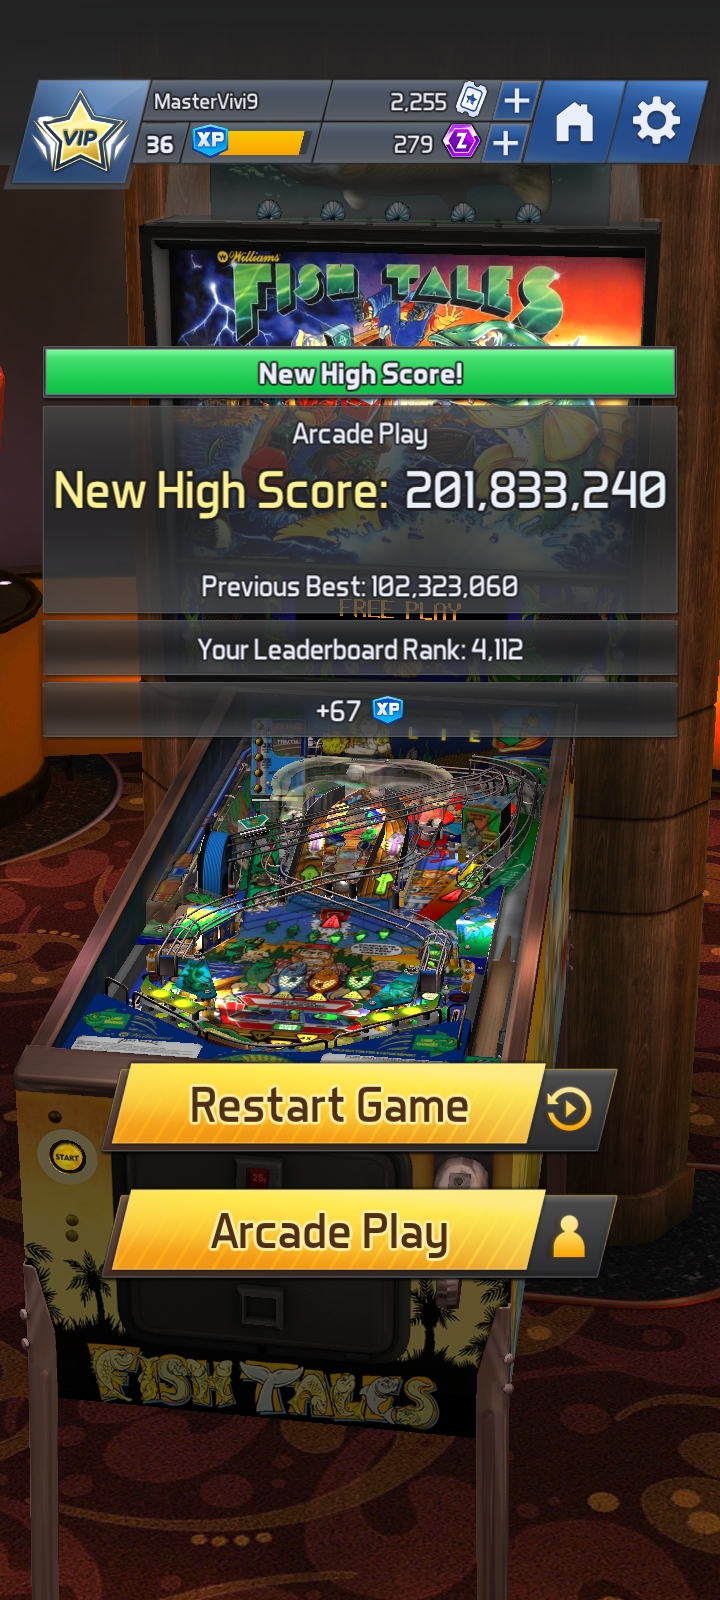 Hauntedprogram: Williams Pinball: Fish Tales [Arcade Play] (Android) 201,833,240 points on 2022-10-22 17:57:32